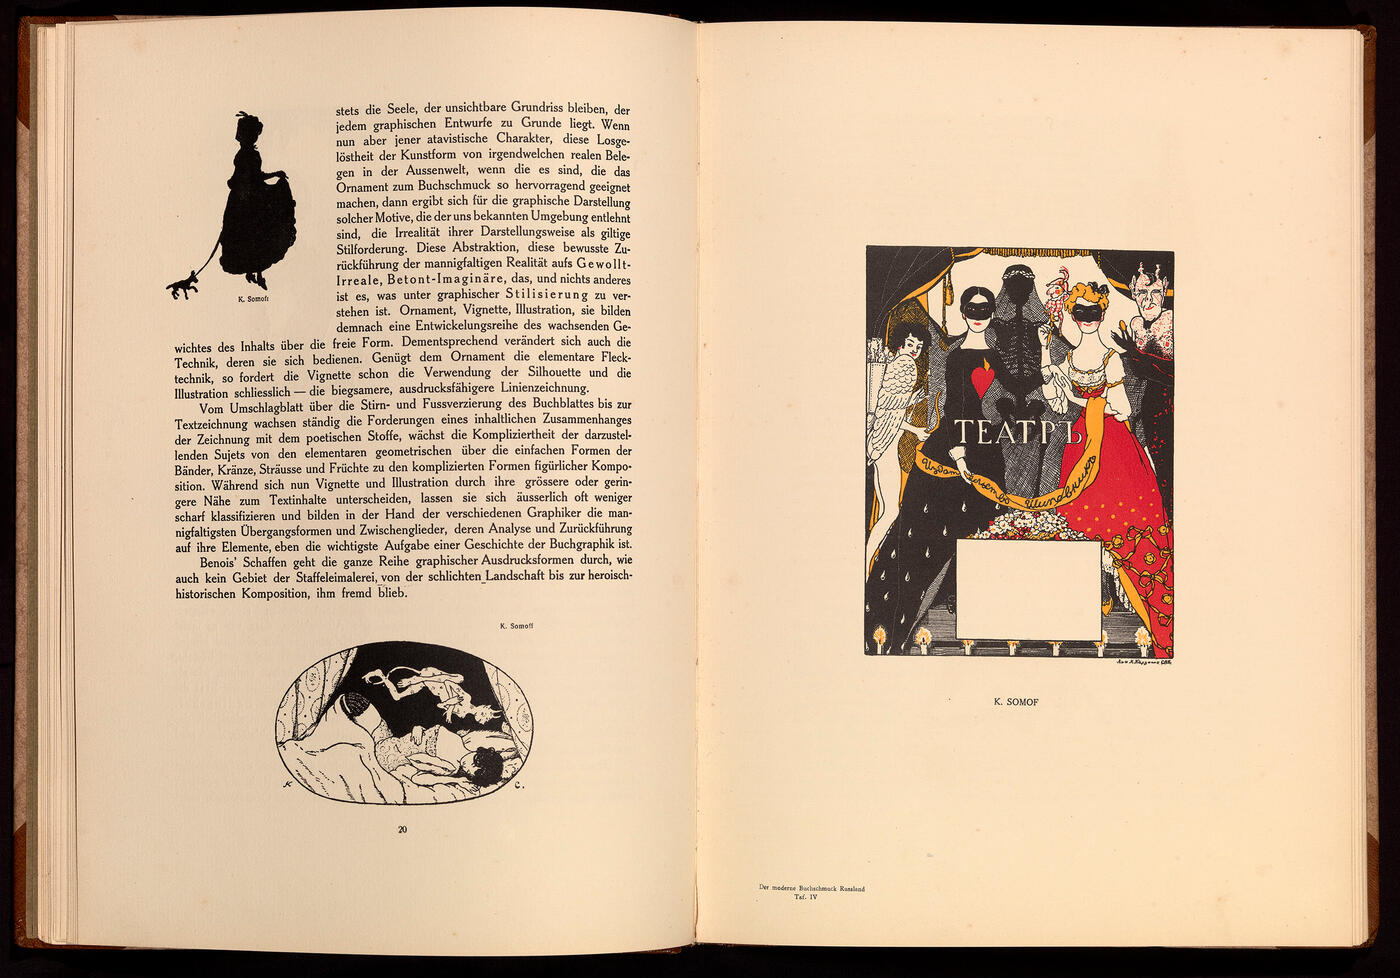 Edited by Sergei Makovsky, text by N. Radlov, St Petersburg, R. Golicke and A. Willborg, 1914